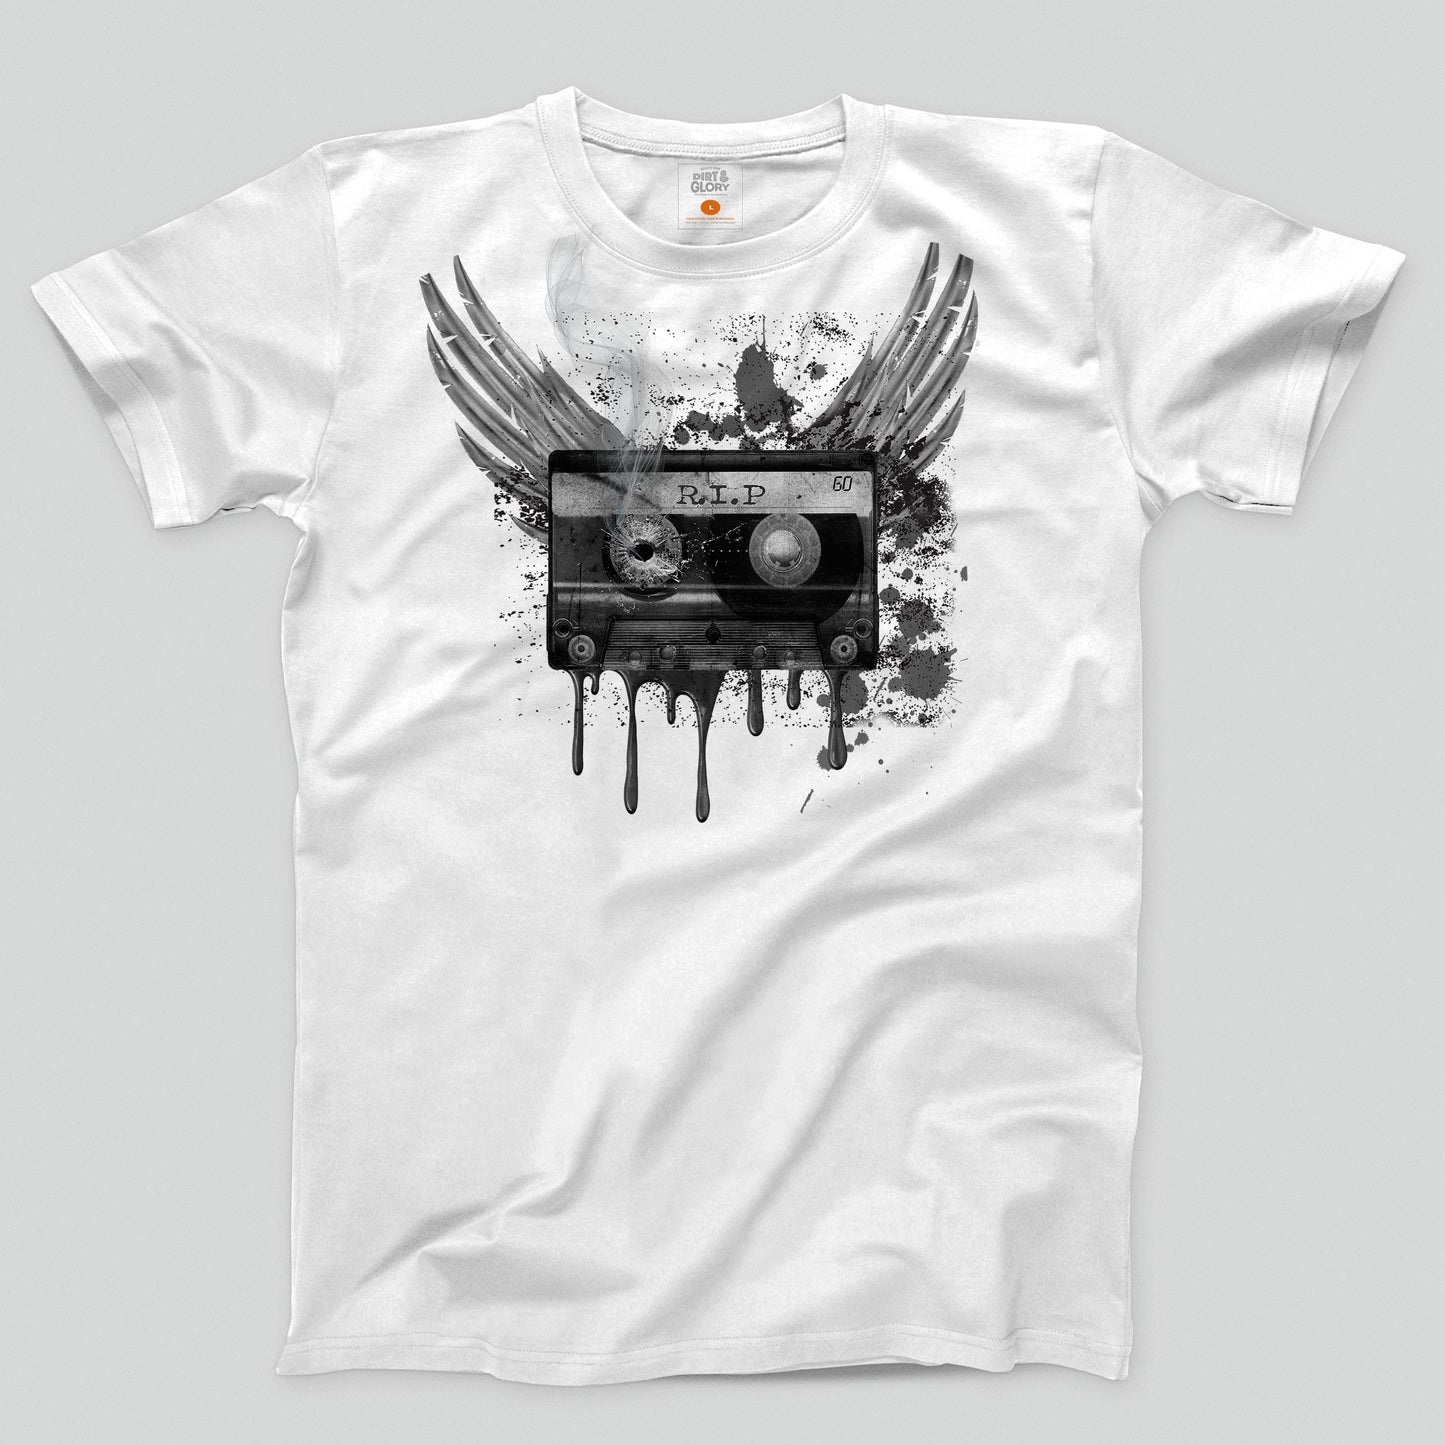 Tape Death - Men's/Unisex T-shirt T-shirt by DIRT & GLORY